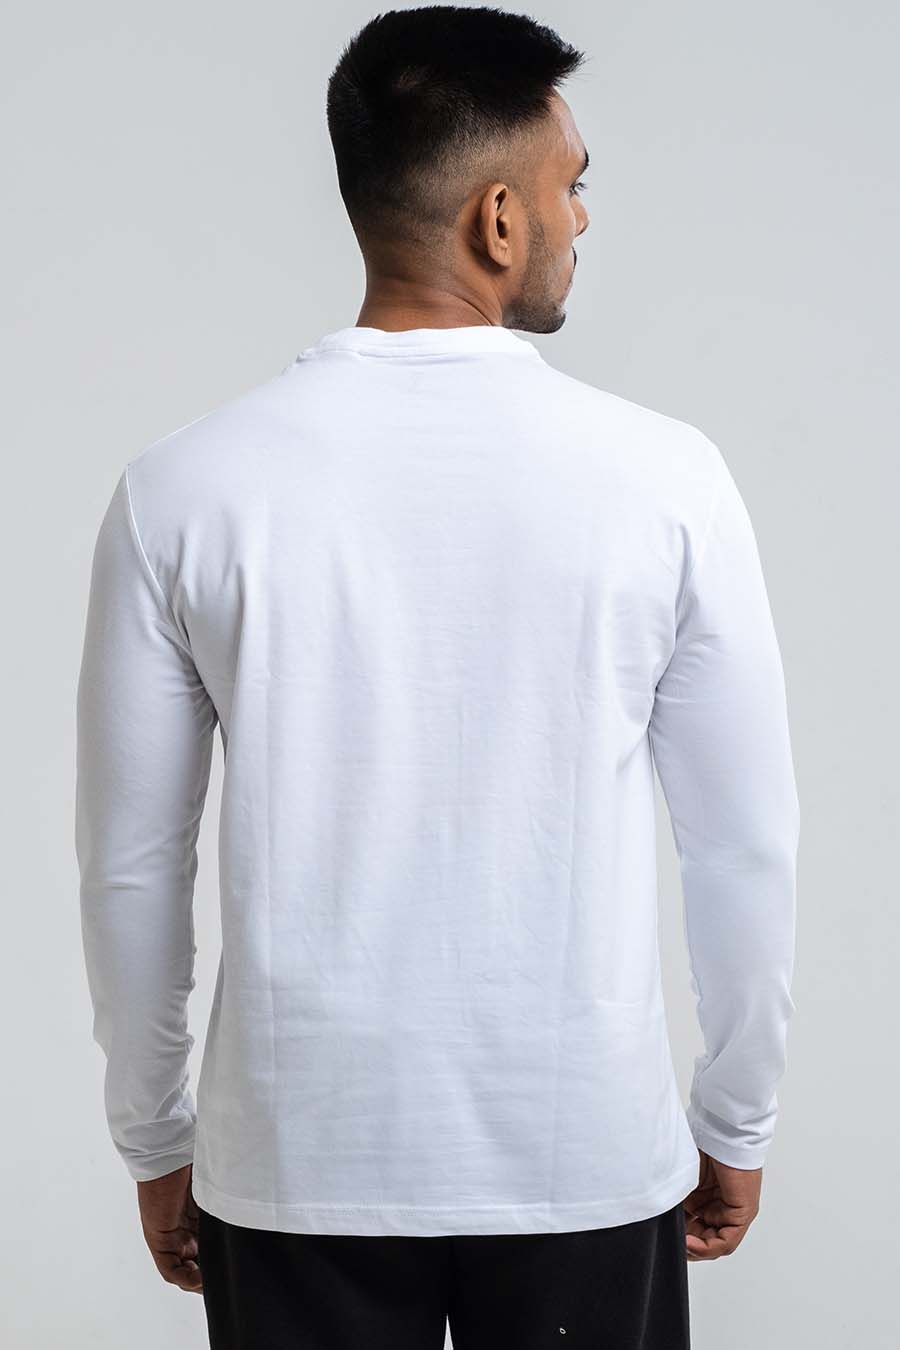 Longs steeve Plain staple color, solid lycra jersey T-shirt